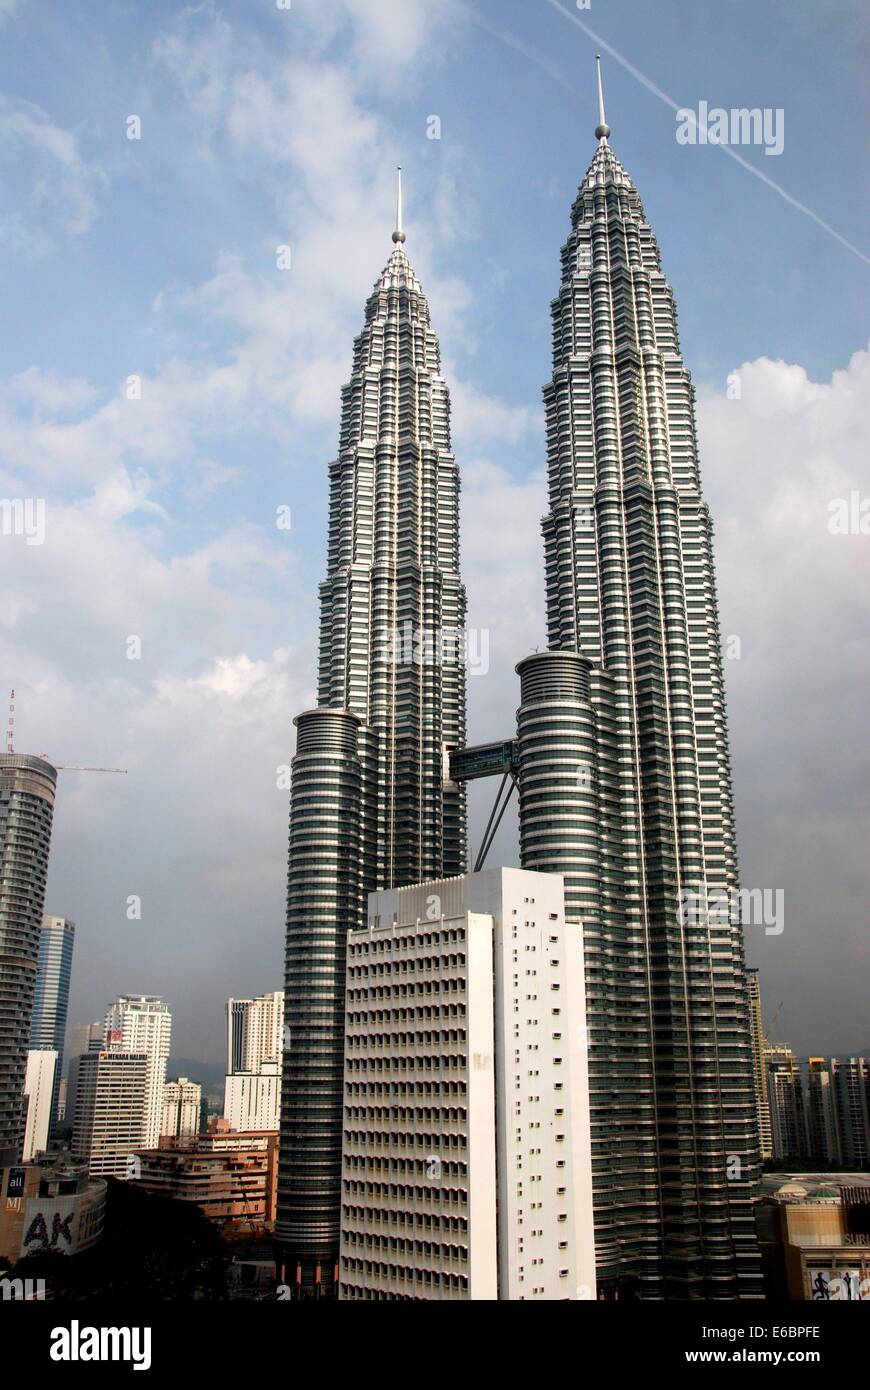 KUALA LUMPUR, MALAYASIA:  The twin Petronas Towers soar to a height of 451.9 metres over the city Stock Photo